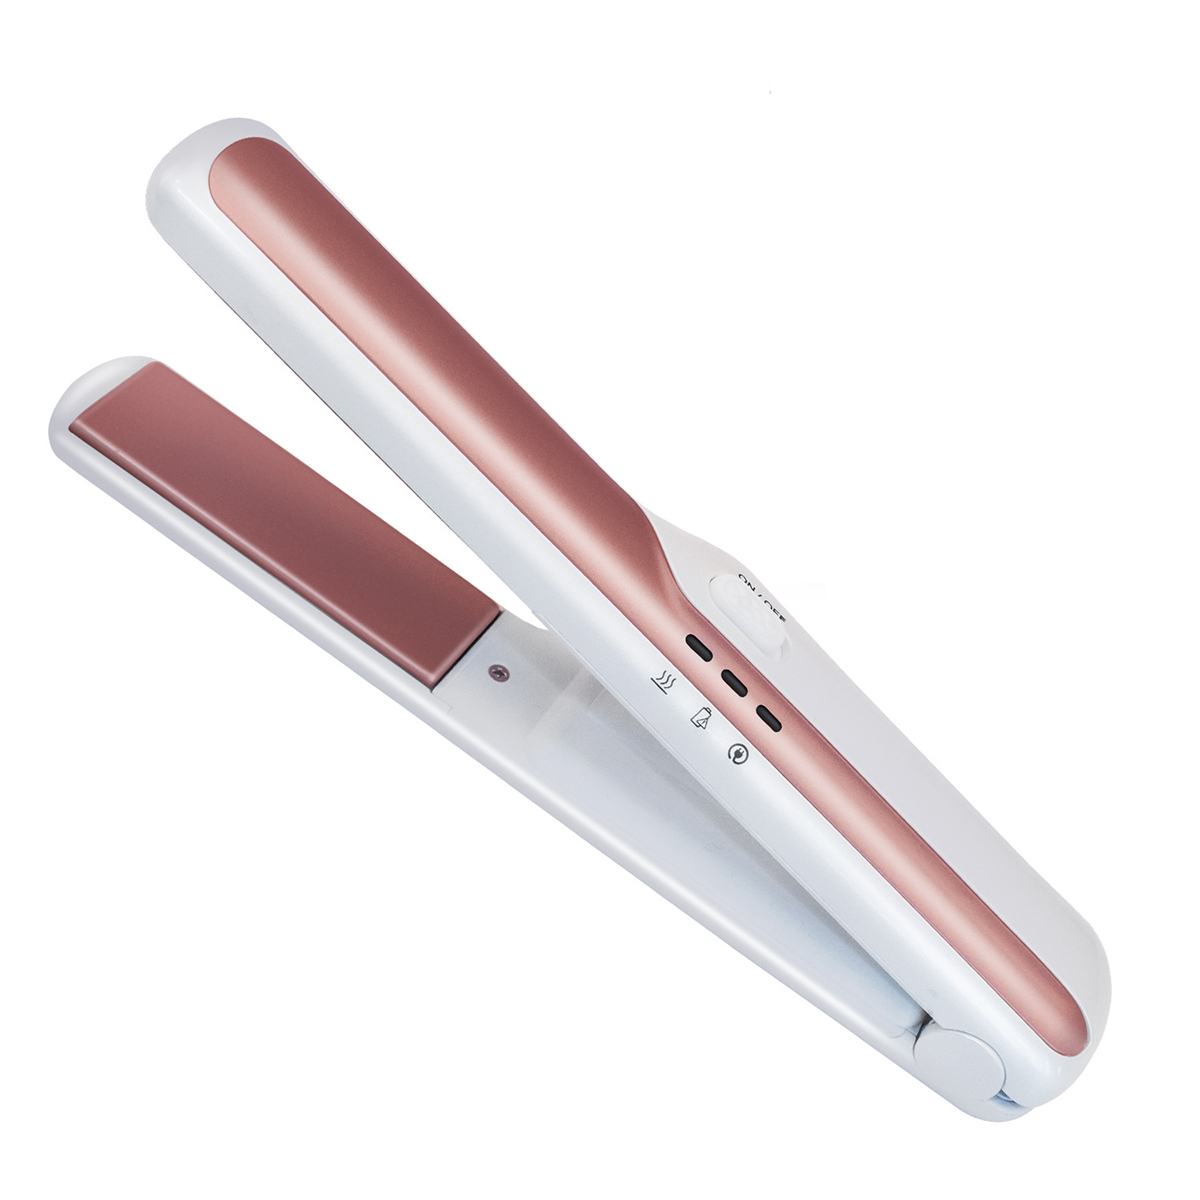 USB-aufladbar Keramik Temperaturstufen: 10 Mini SHAOKE einsetzbar Glätteisen, Wireless vielseitig Nass/Trocken Haarglätter